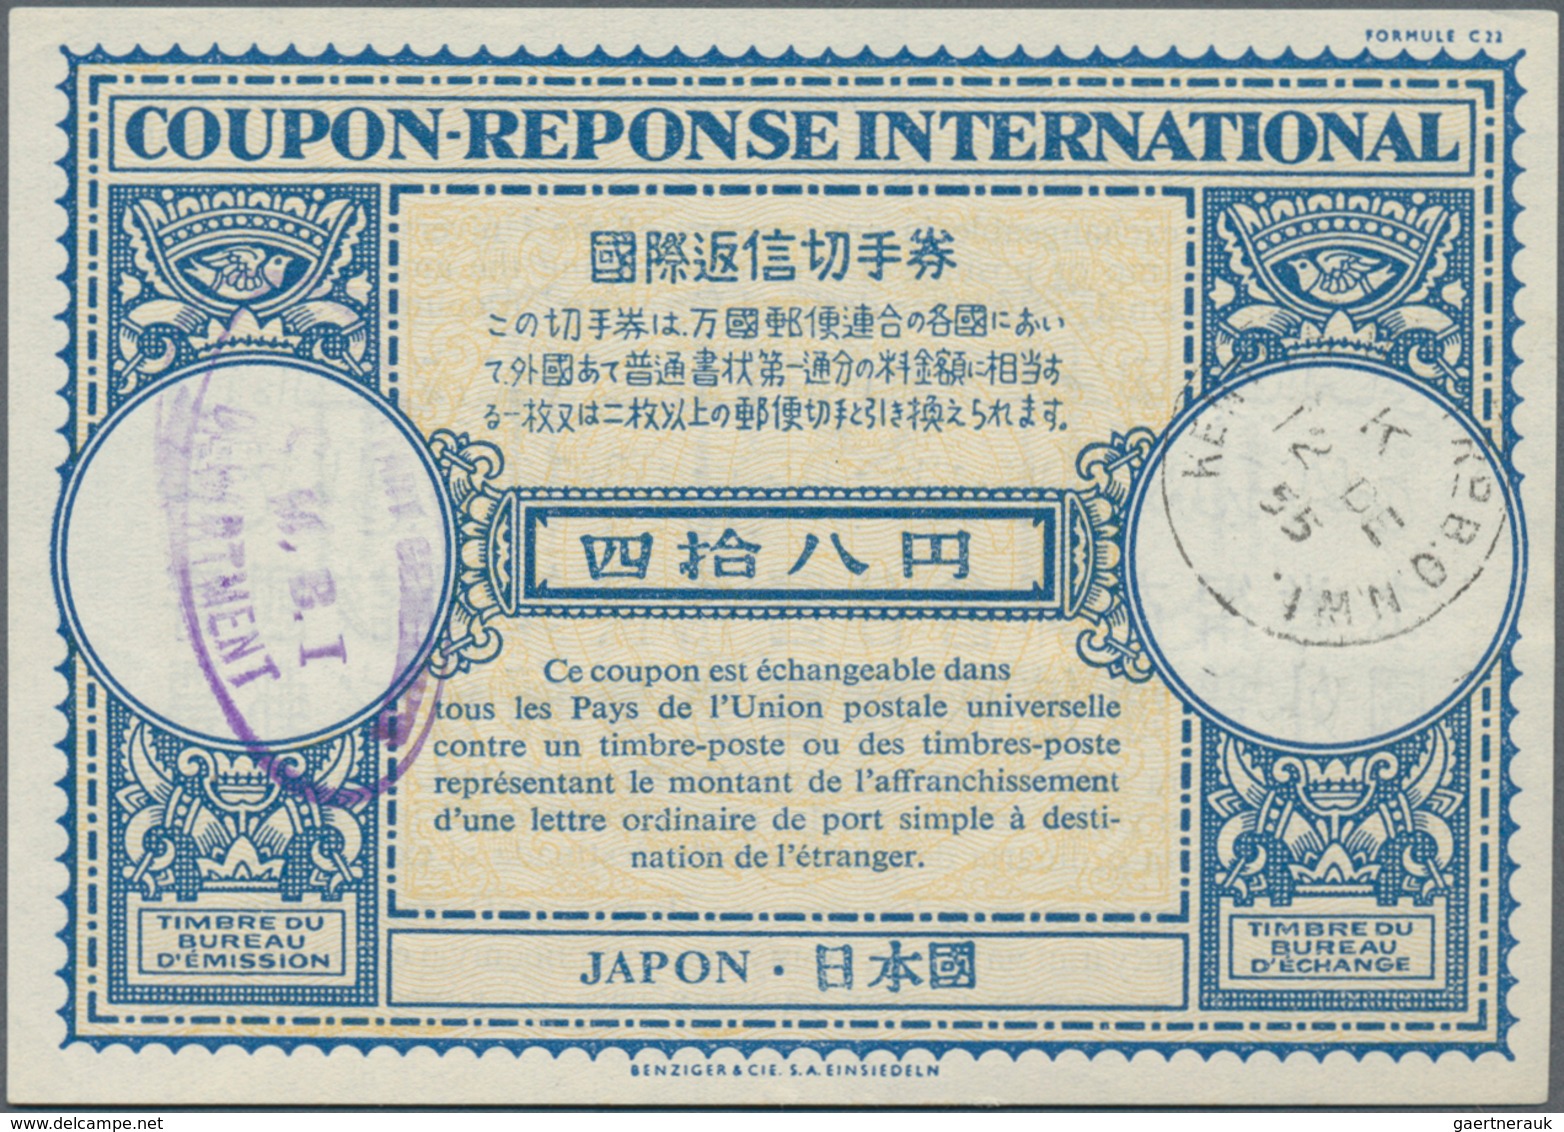 Japan - Besonderheiten: 1934/65 (ca.), IRC international reply coupons: 15 sen used, 35 sen/15 sen m